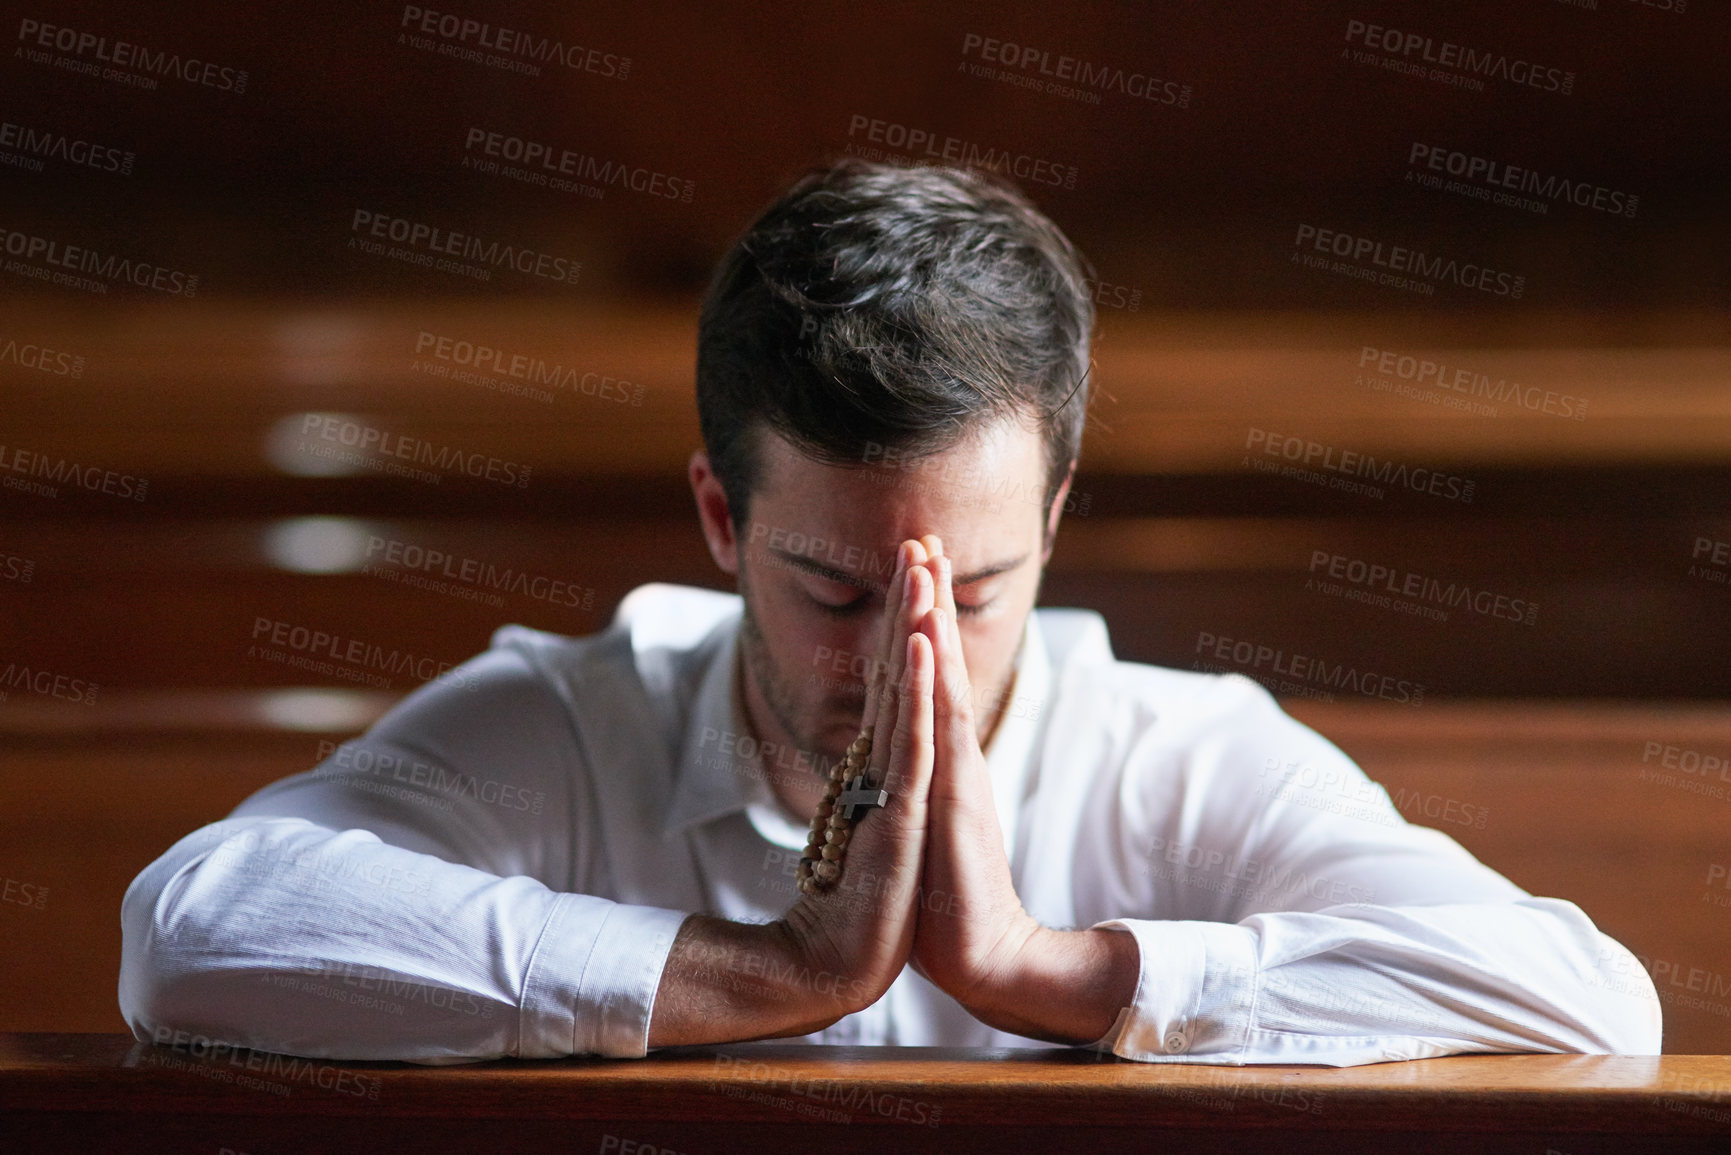 Buy stock photo Shot of a young man praying in a church